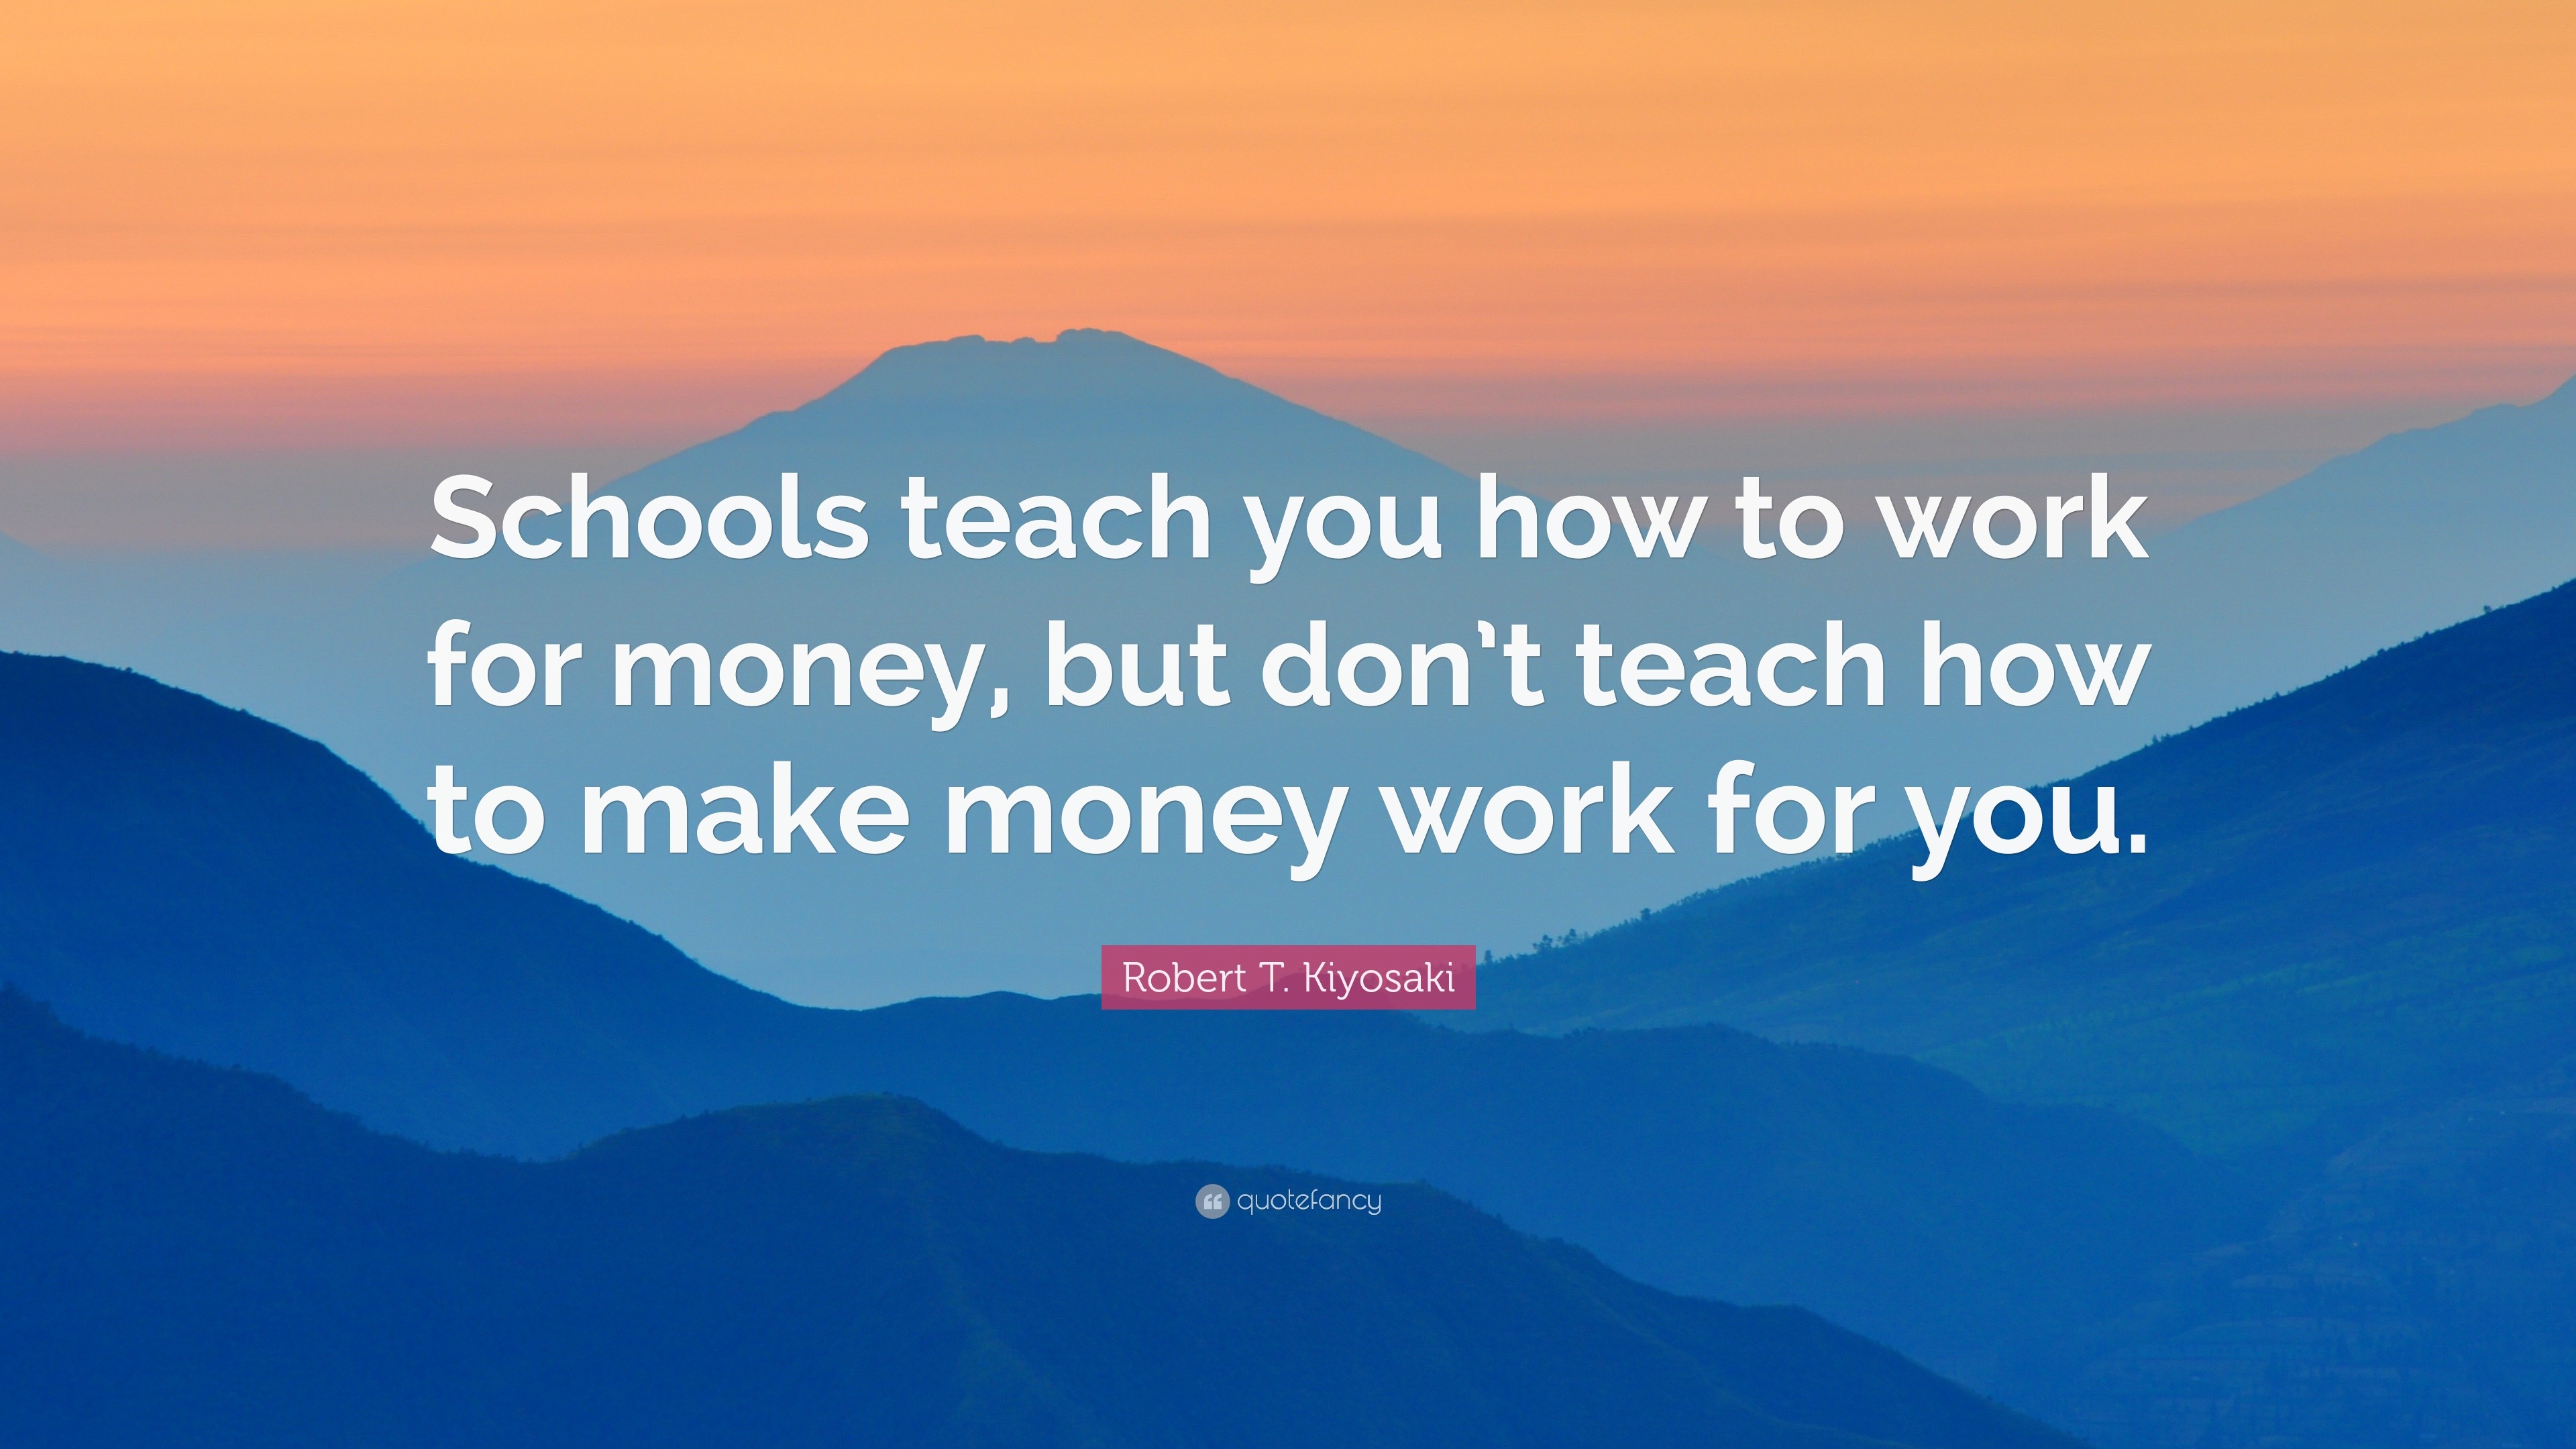 76239 Robert T Kiyosaki Quote Schools teach you how to work for money